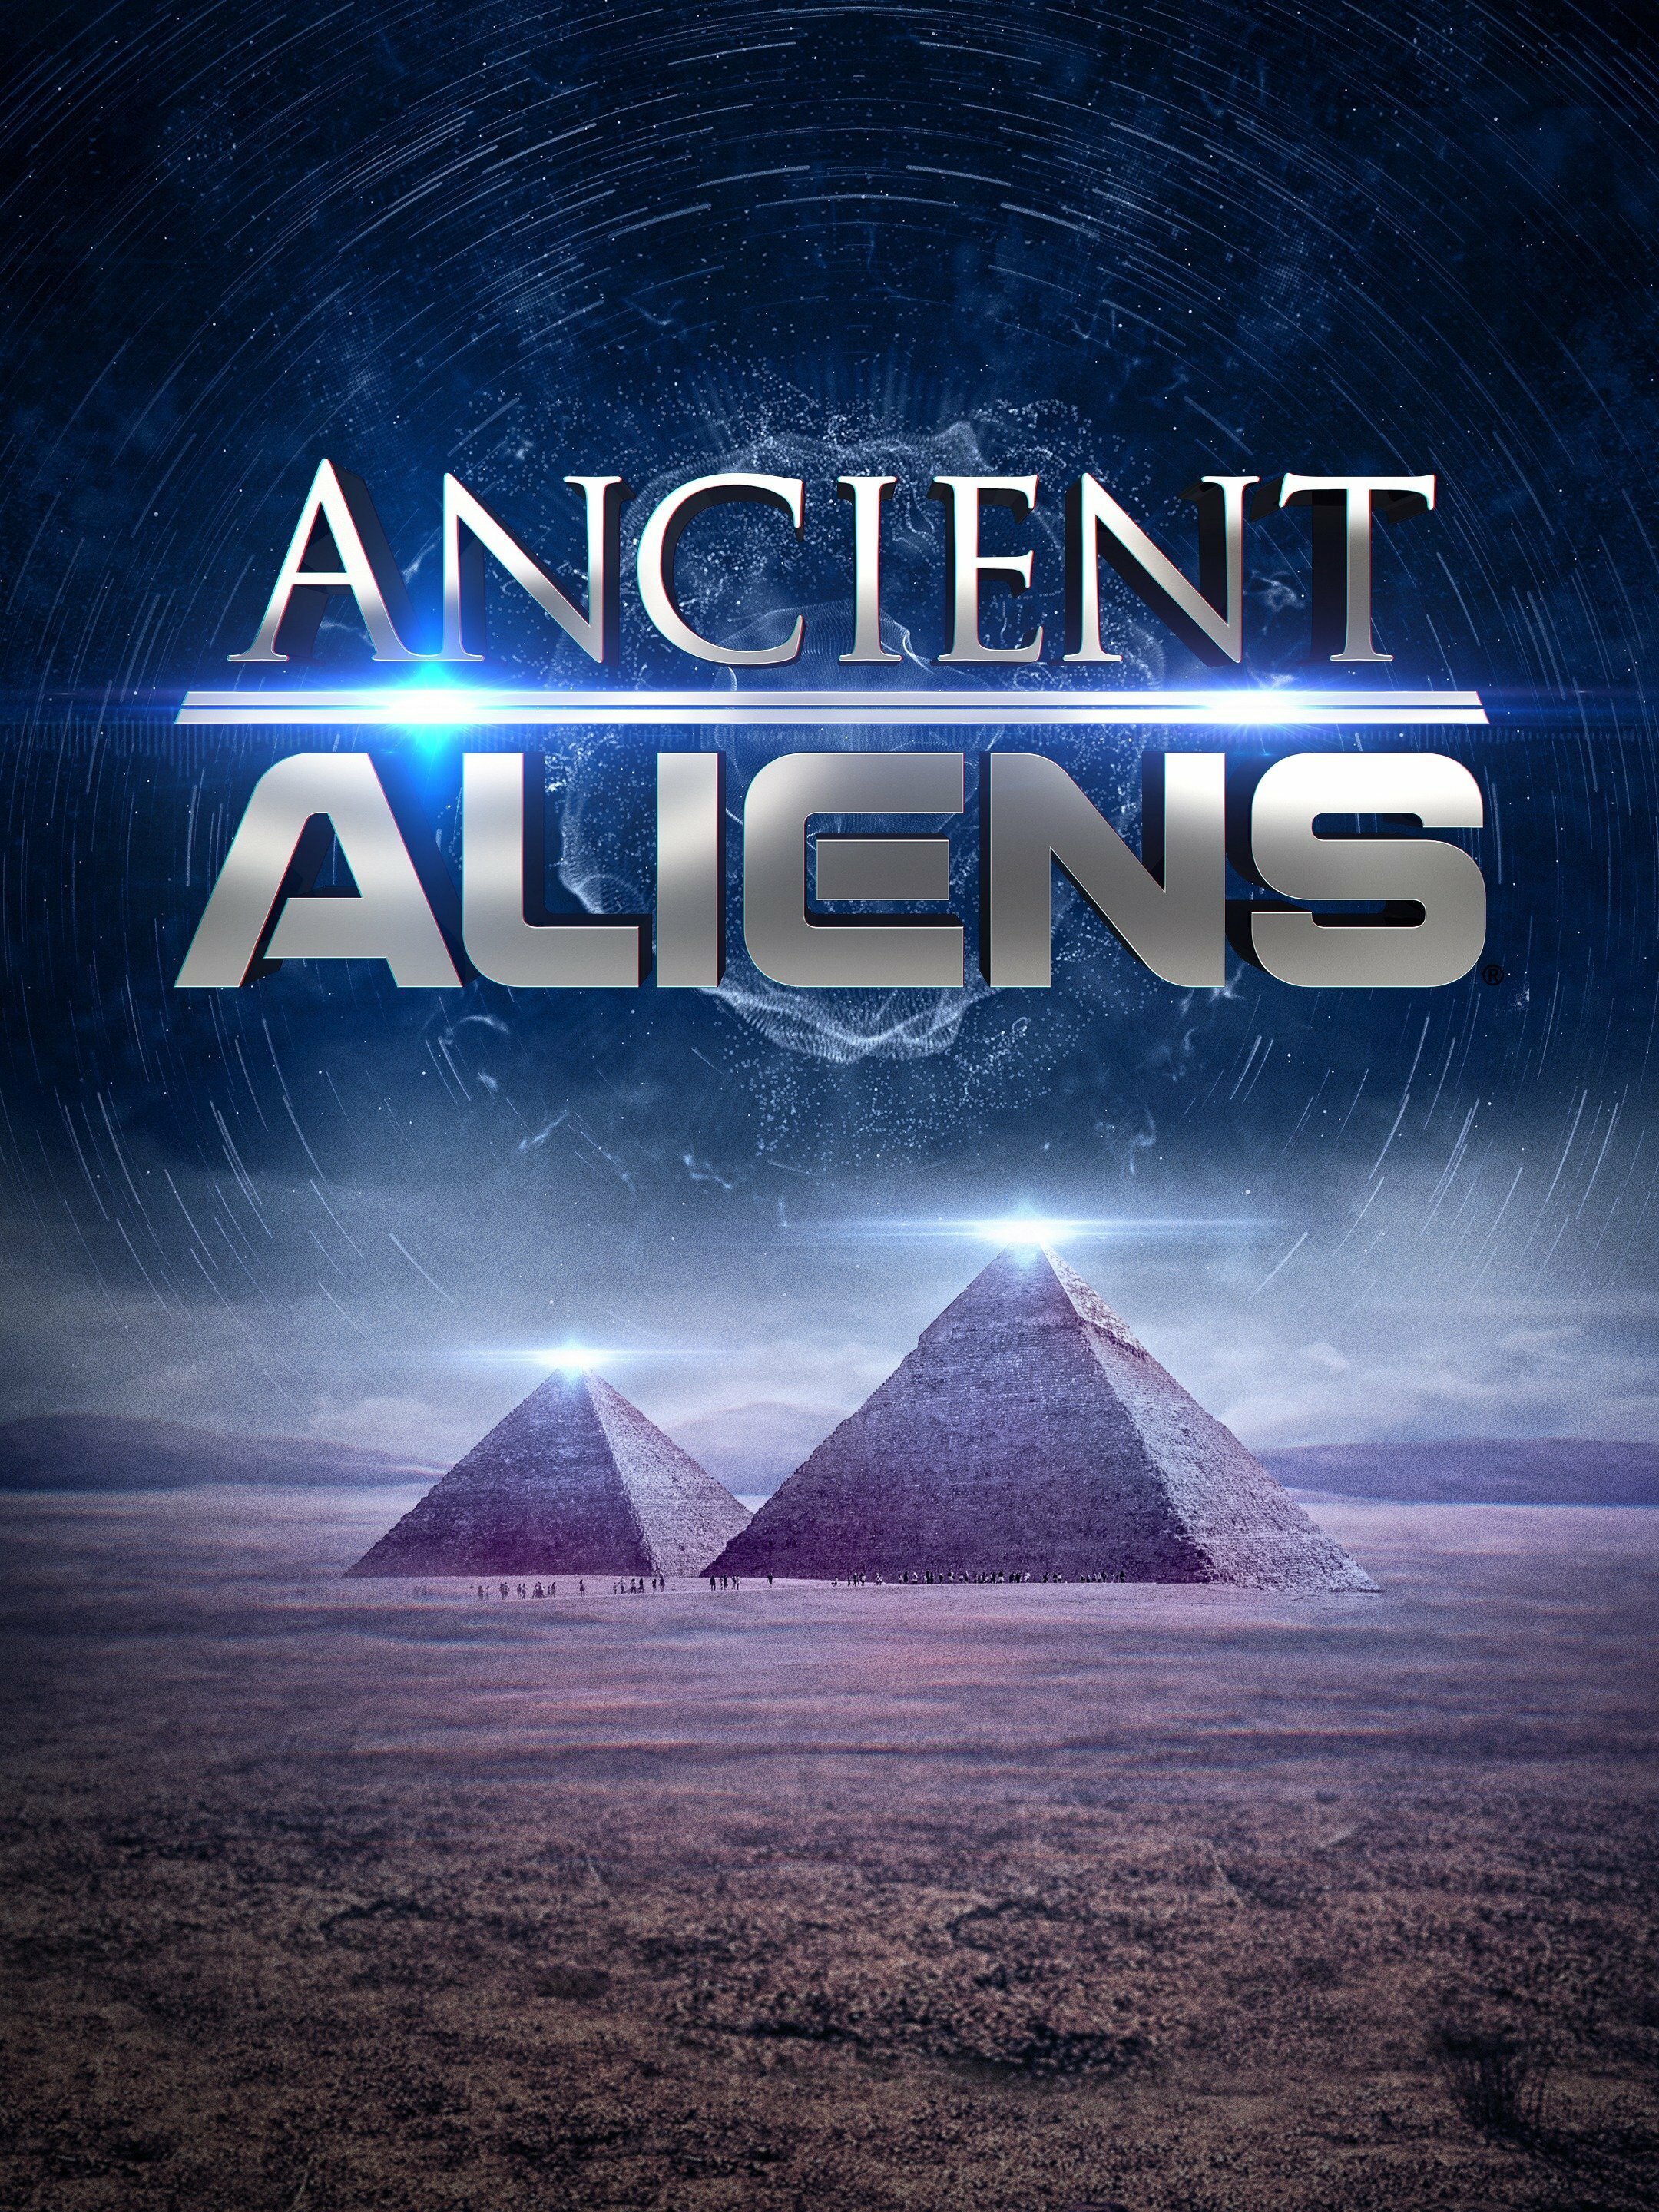 ancient aliens season 1 episode 4